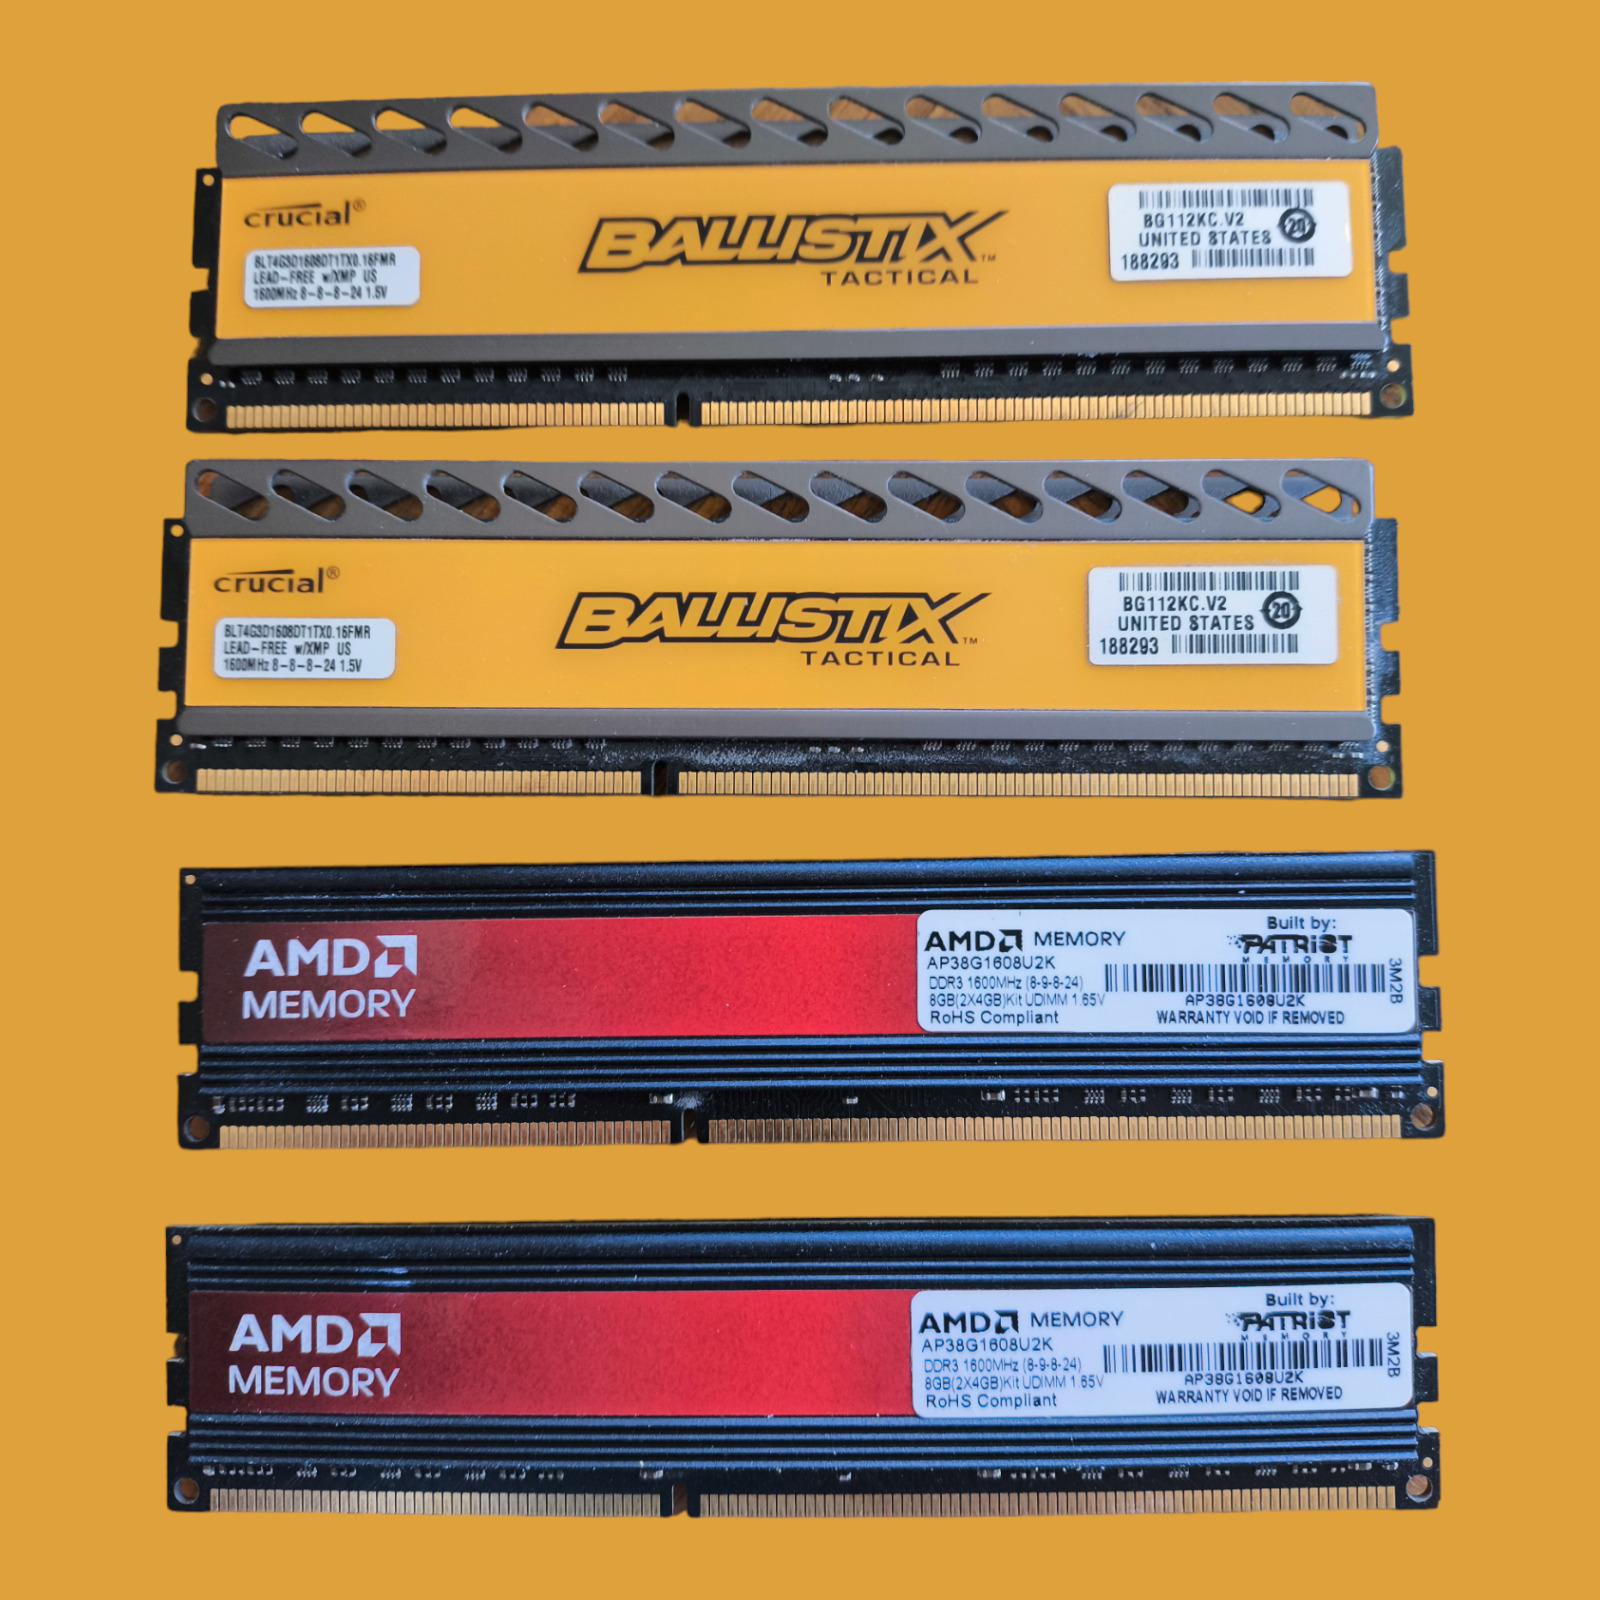 DDR3 Memory:  2x 4GB Crucial Ballistix Tactical & 2x 4GB AMD (Built by Patriot)